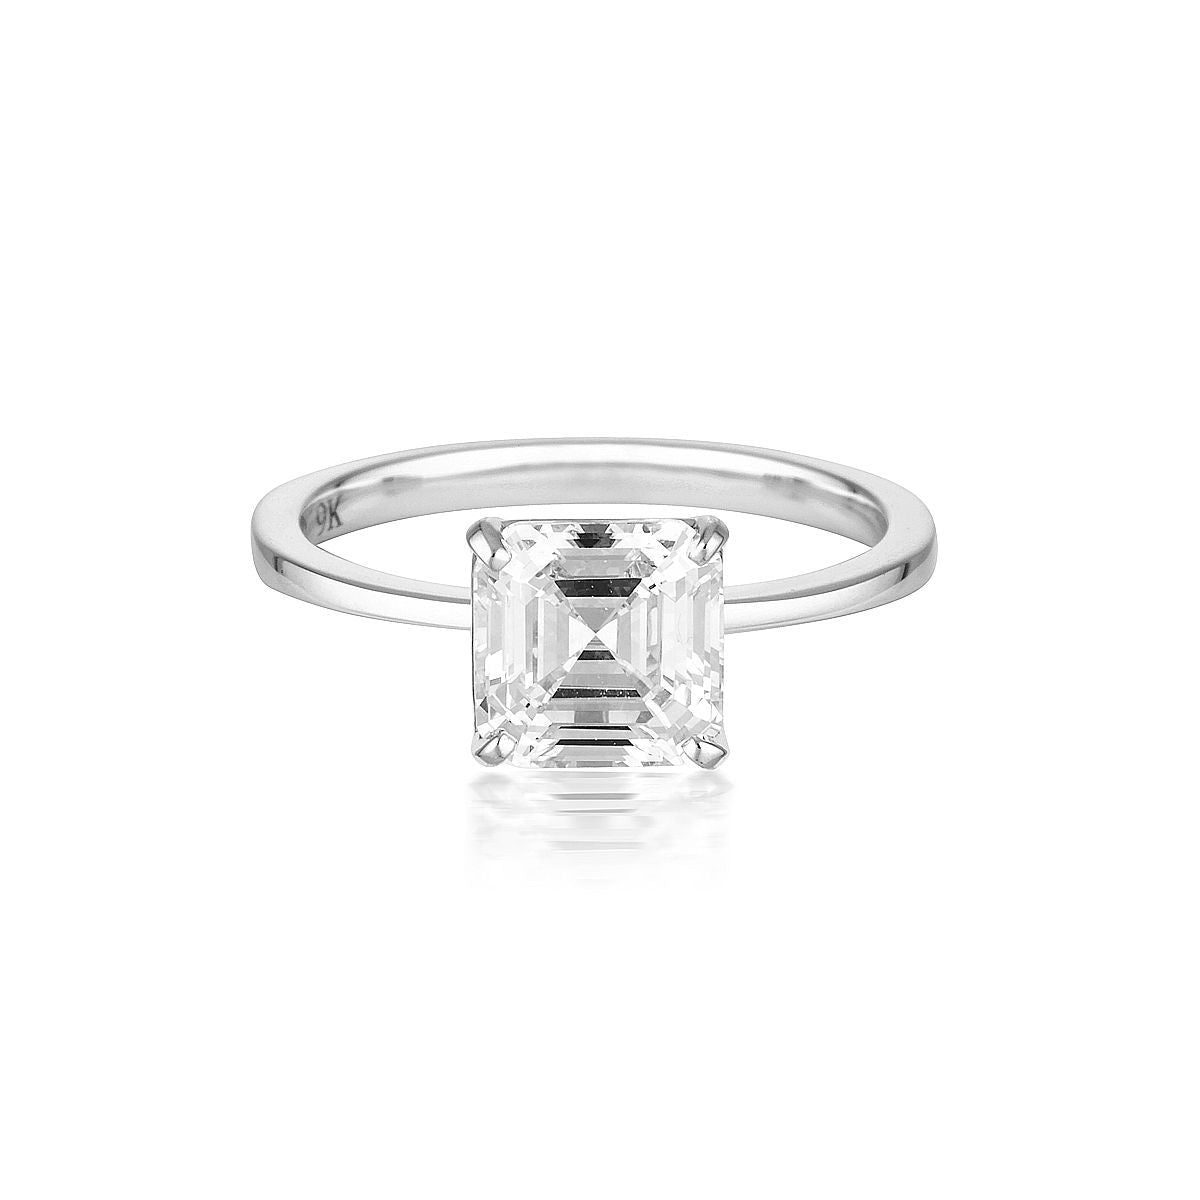 Georgini - Emerald Cut Solitaire 1.5Ct Cubic Zirconia Engagement Ring In 9Ct White Gold